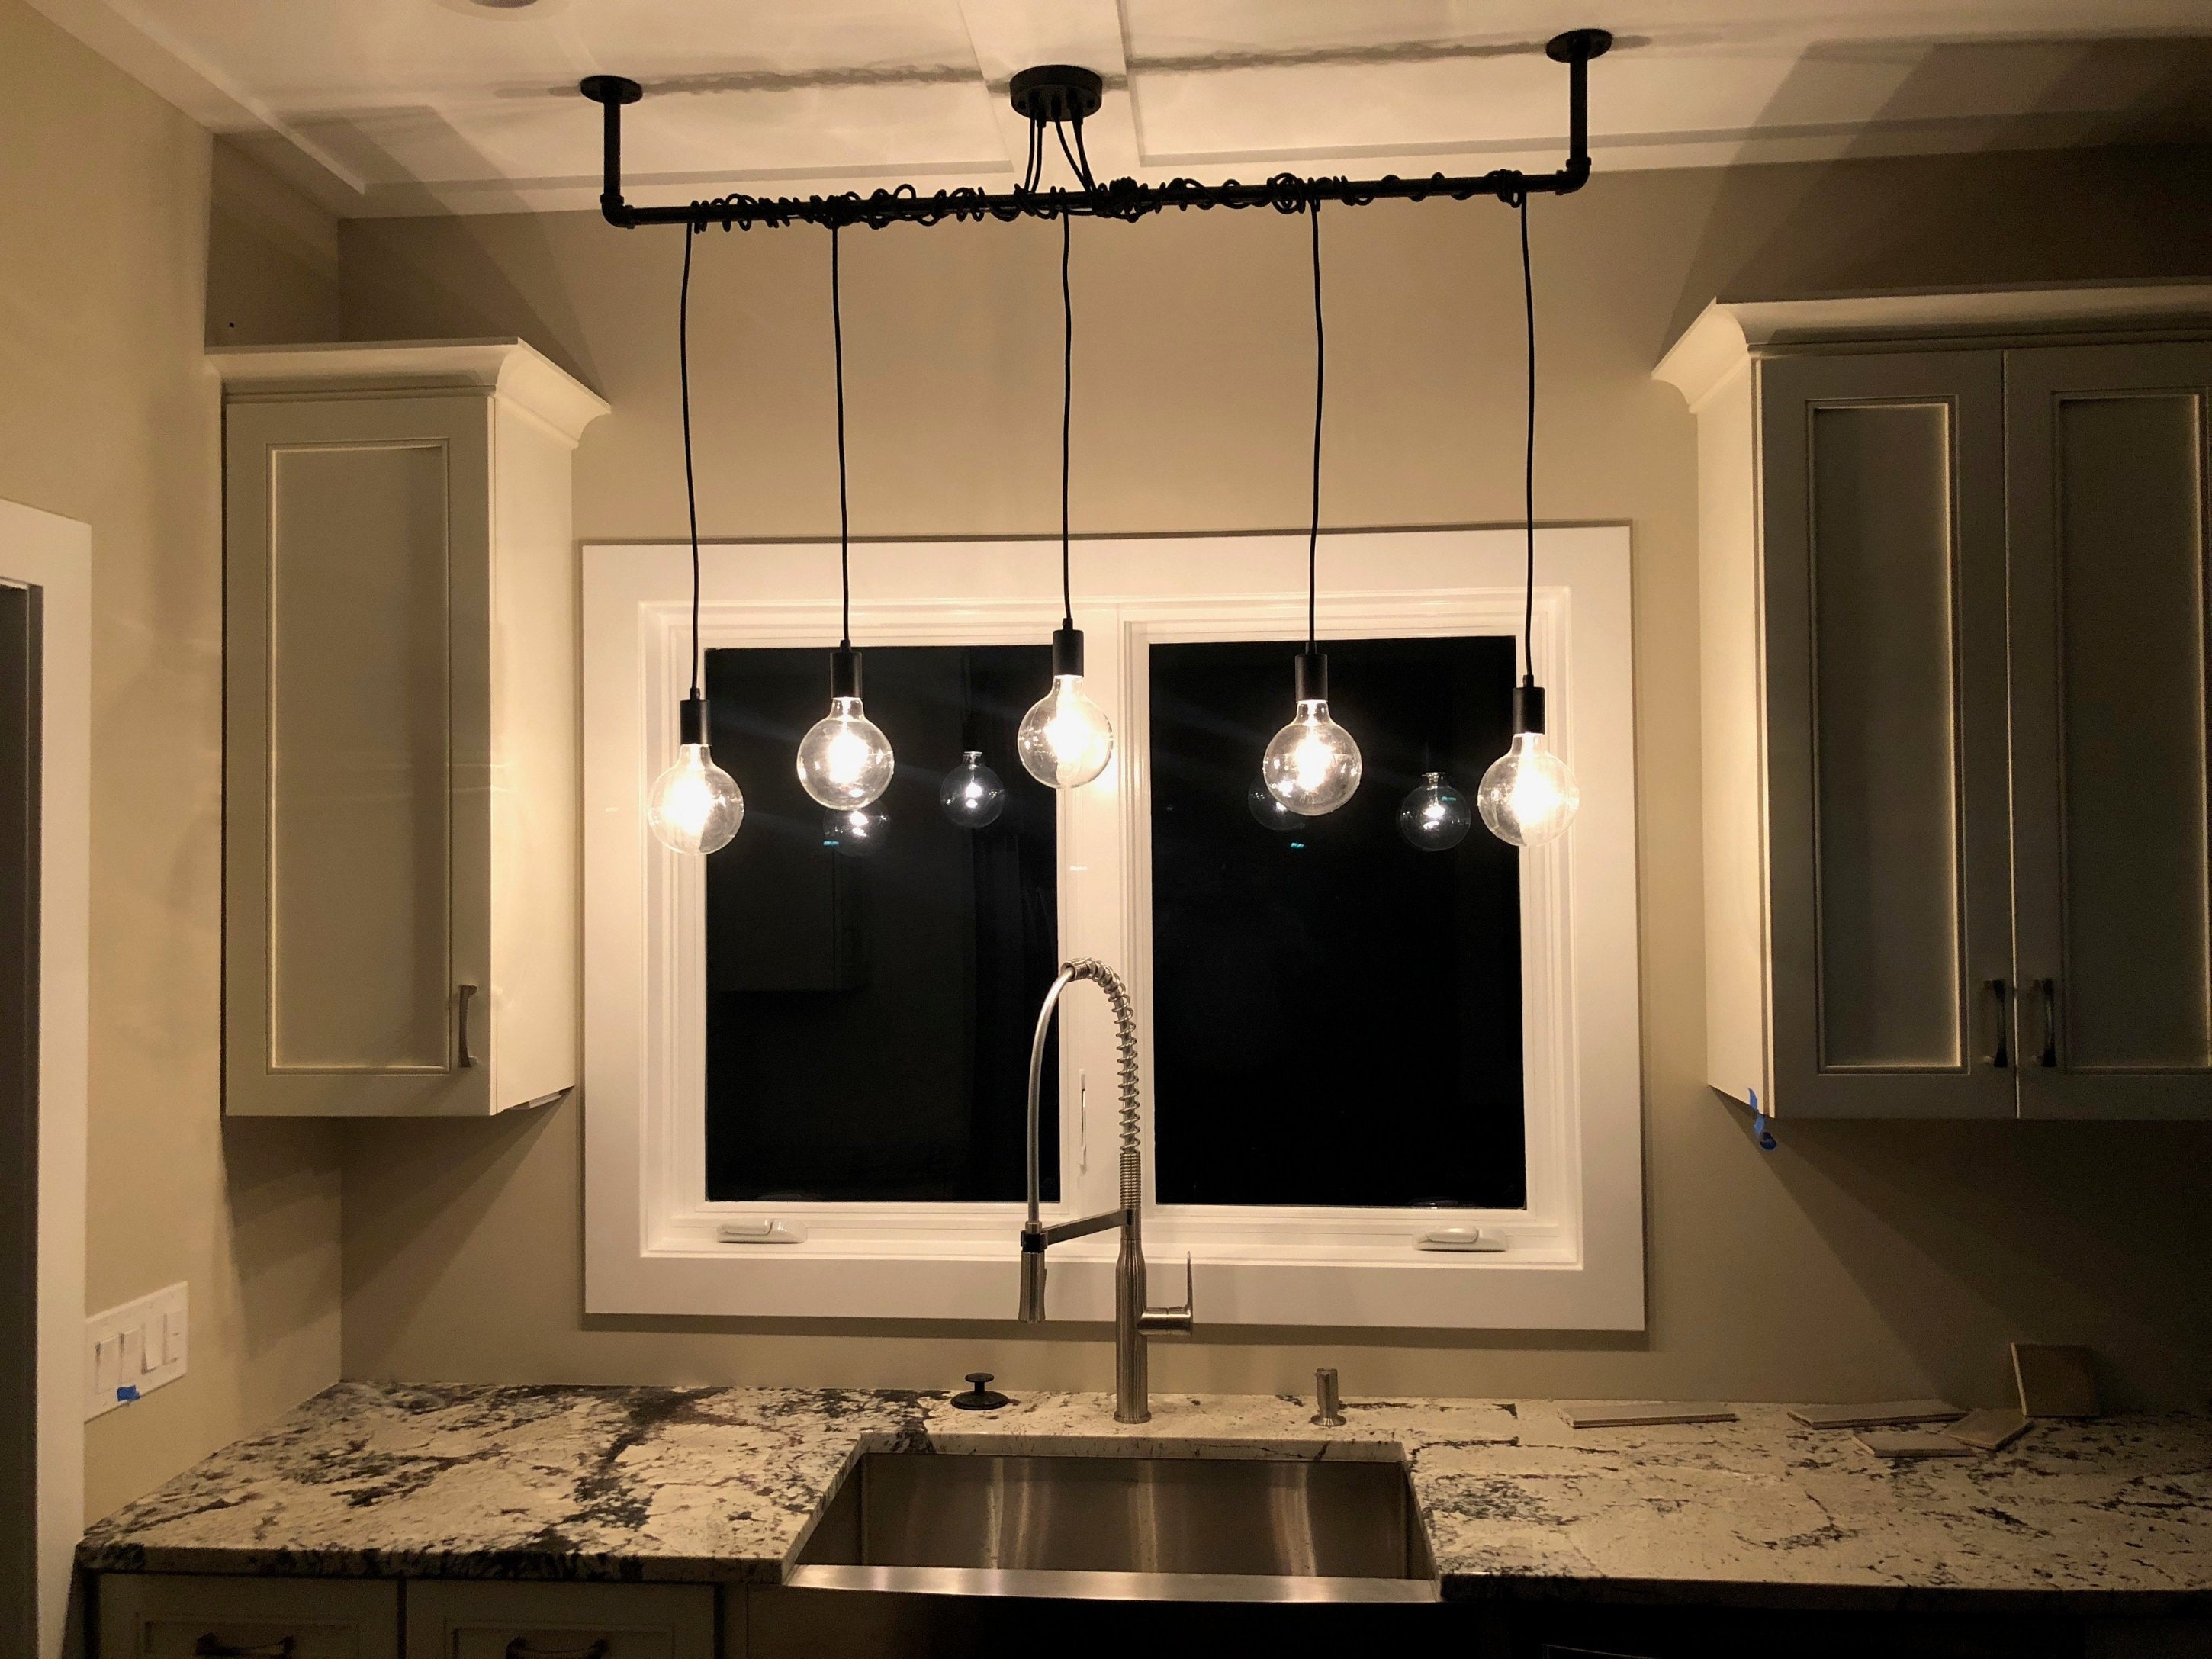 industrial style light above kitchen sink